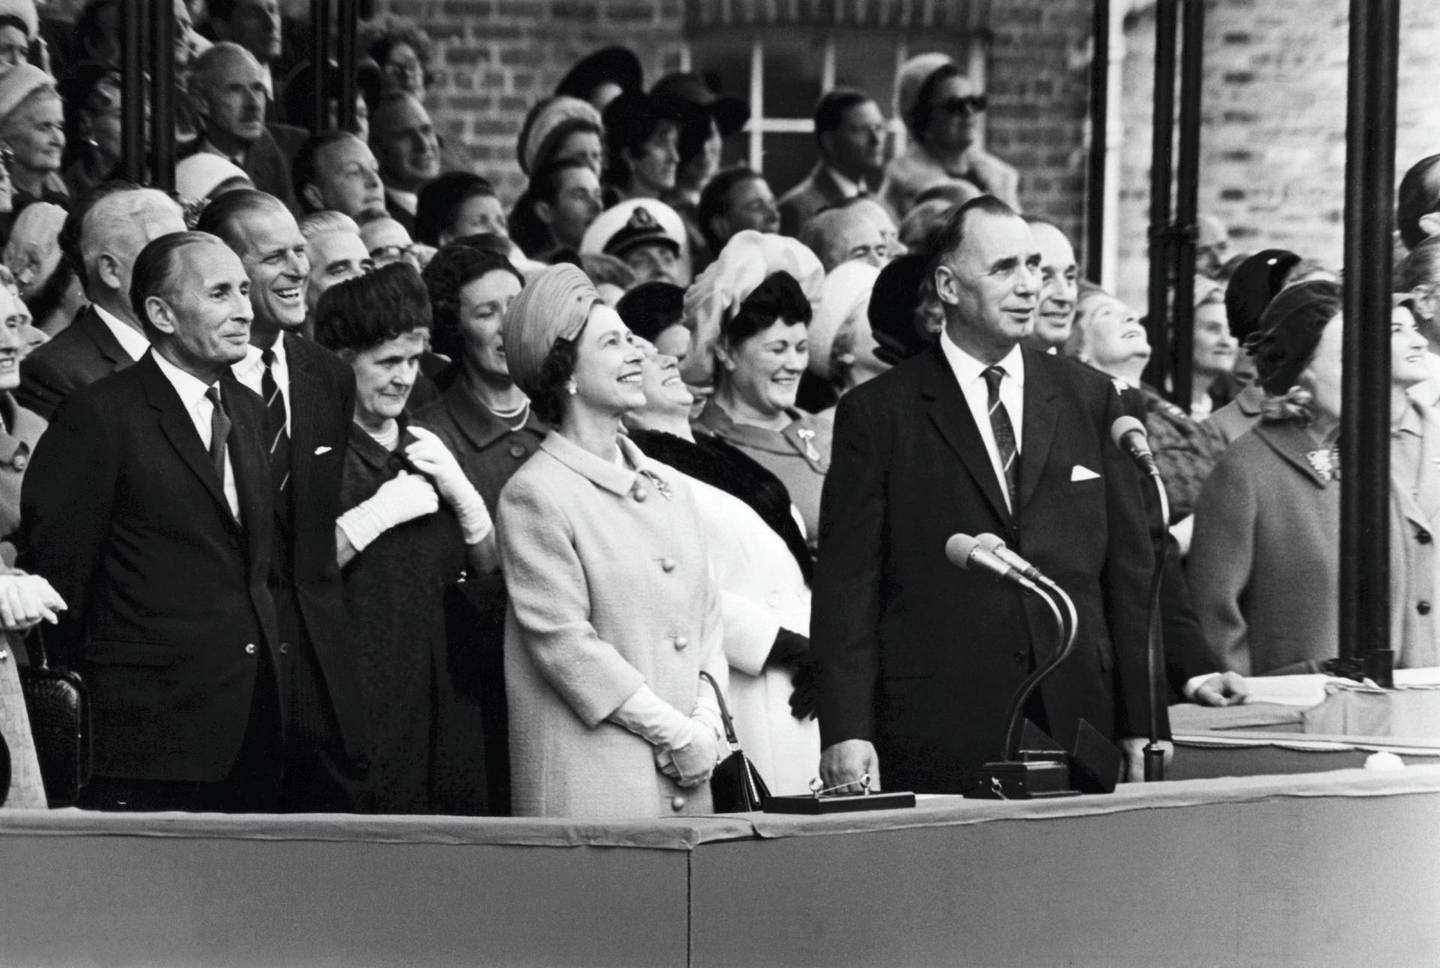 Queen Elizabeth II and Dr. John Rannie attend the launching of the Queen Elizabeth 2. (Photo by Hulton-Deutsch/Hulton-Deutsch Collection/Corbis via Getty Images)